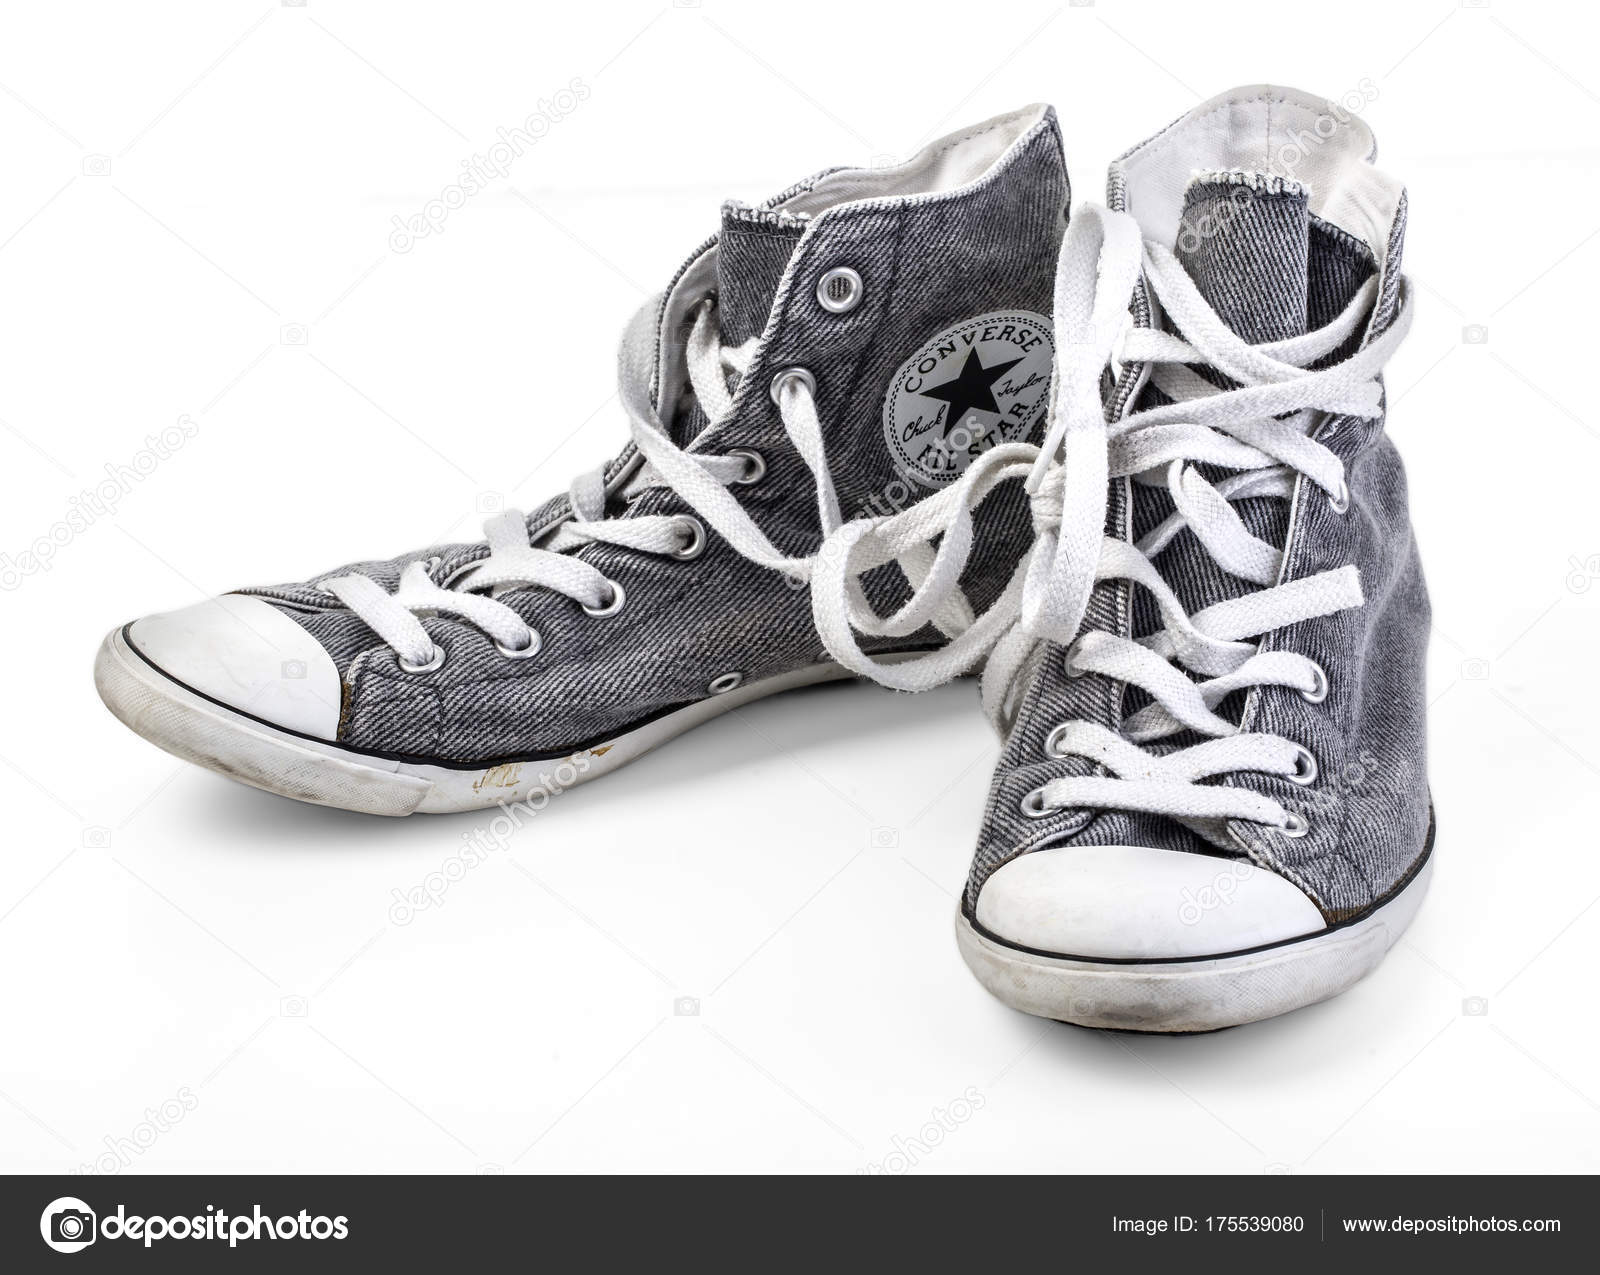 Converse shoes – Stock Editorial Photo © kornienkoalex #175539080